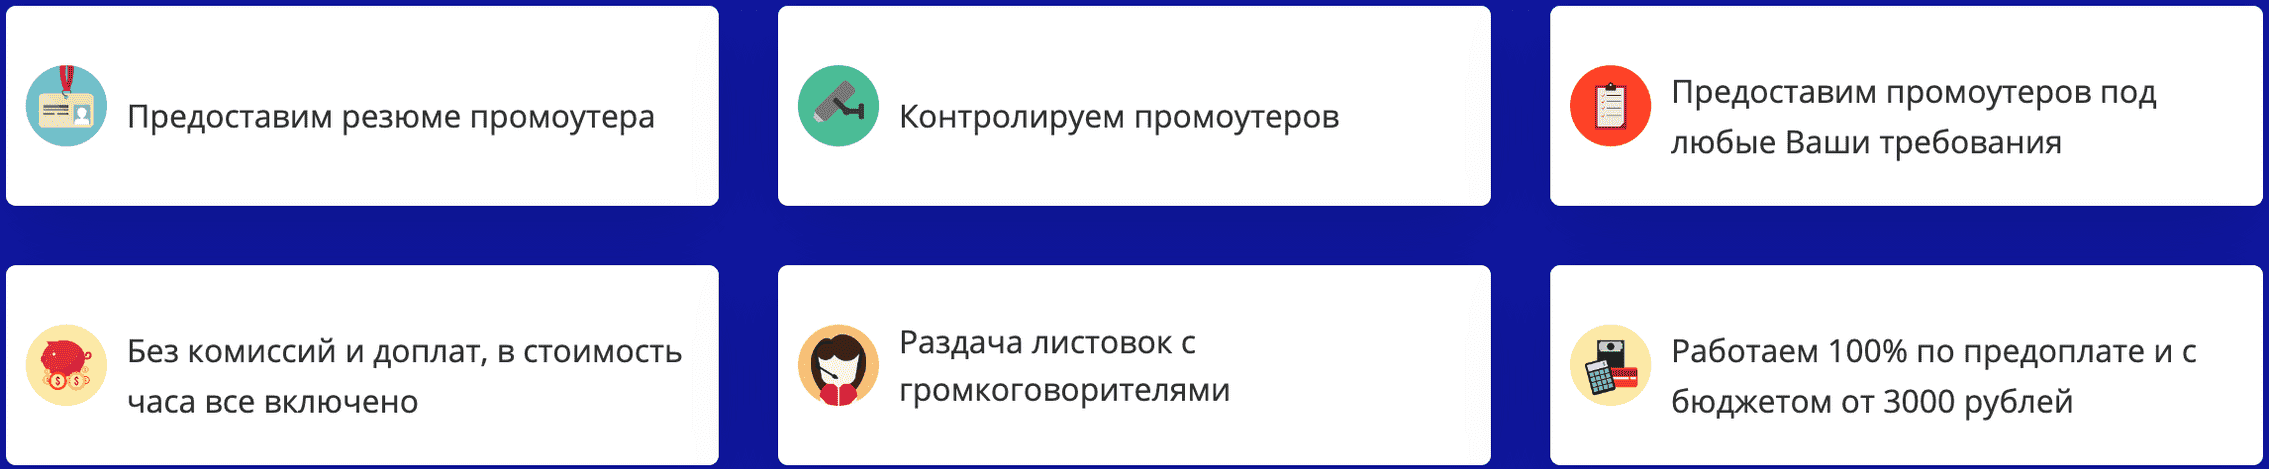 Описание услуги агентства по раздаче листовок в Москве Акула